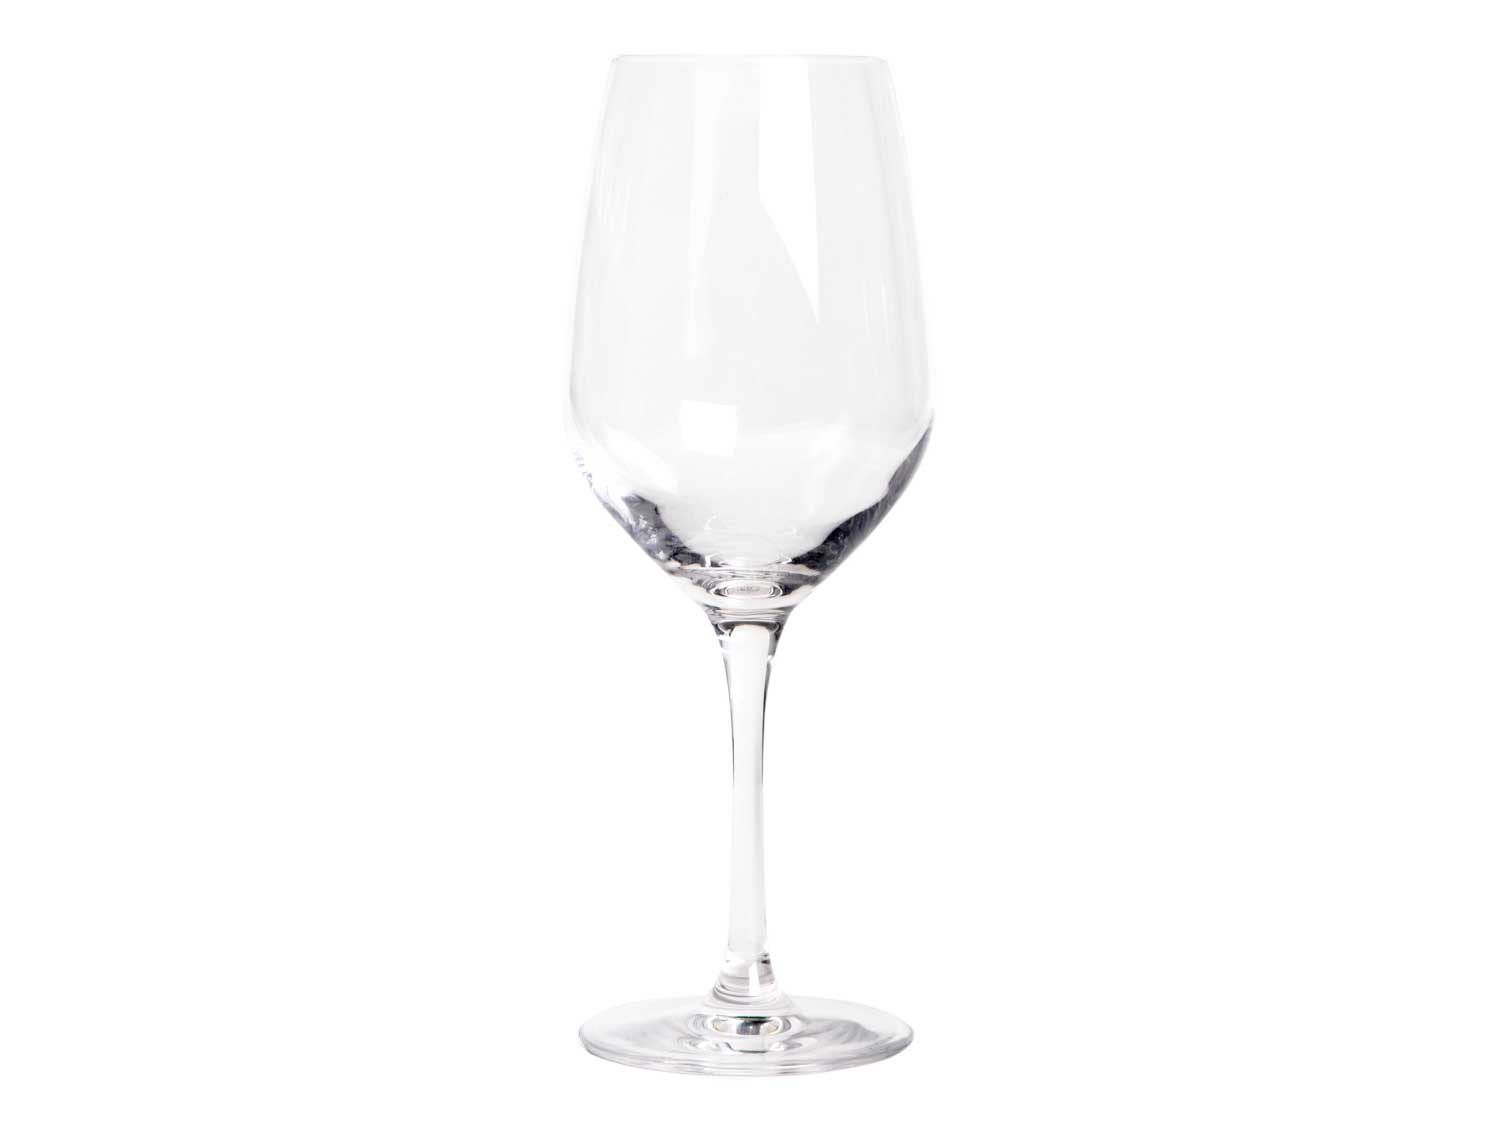 Stolzle Eclipse酒杯在白色背景